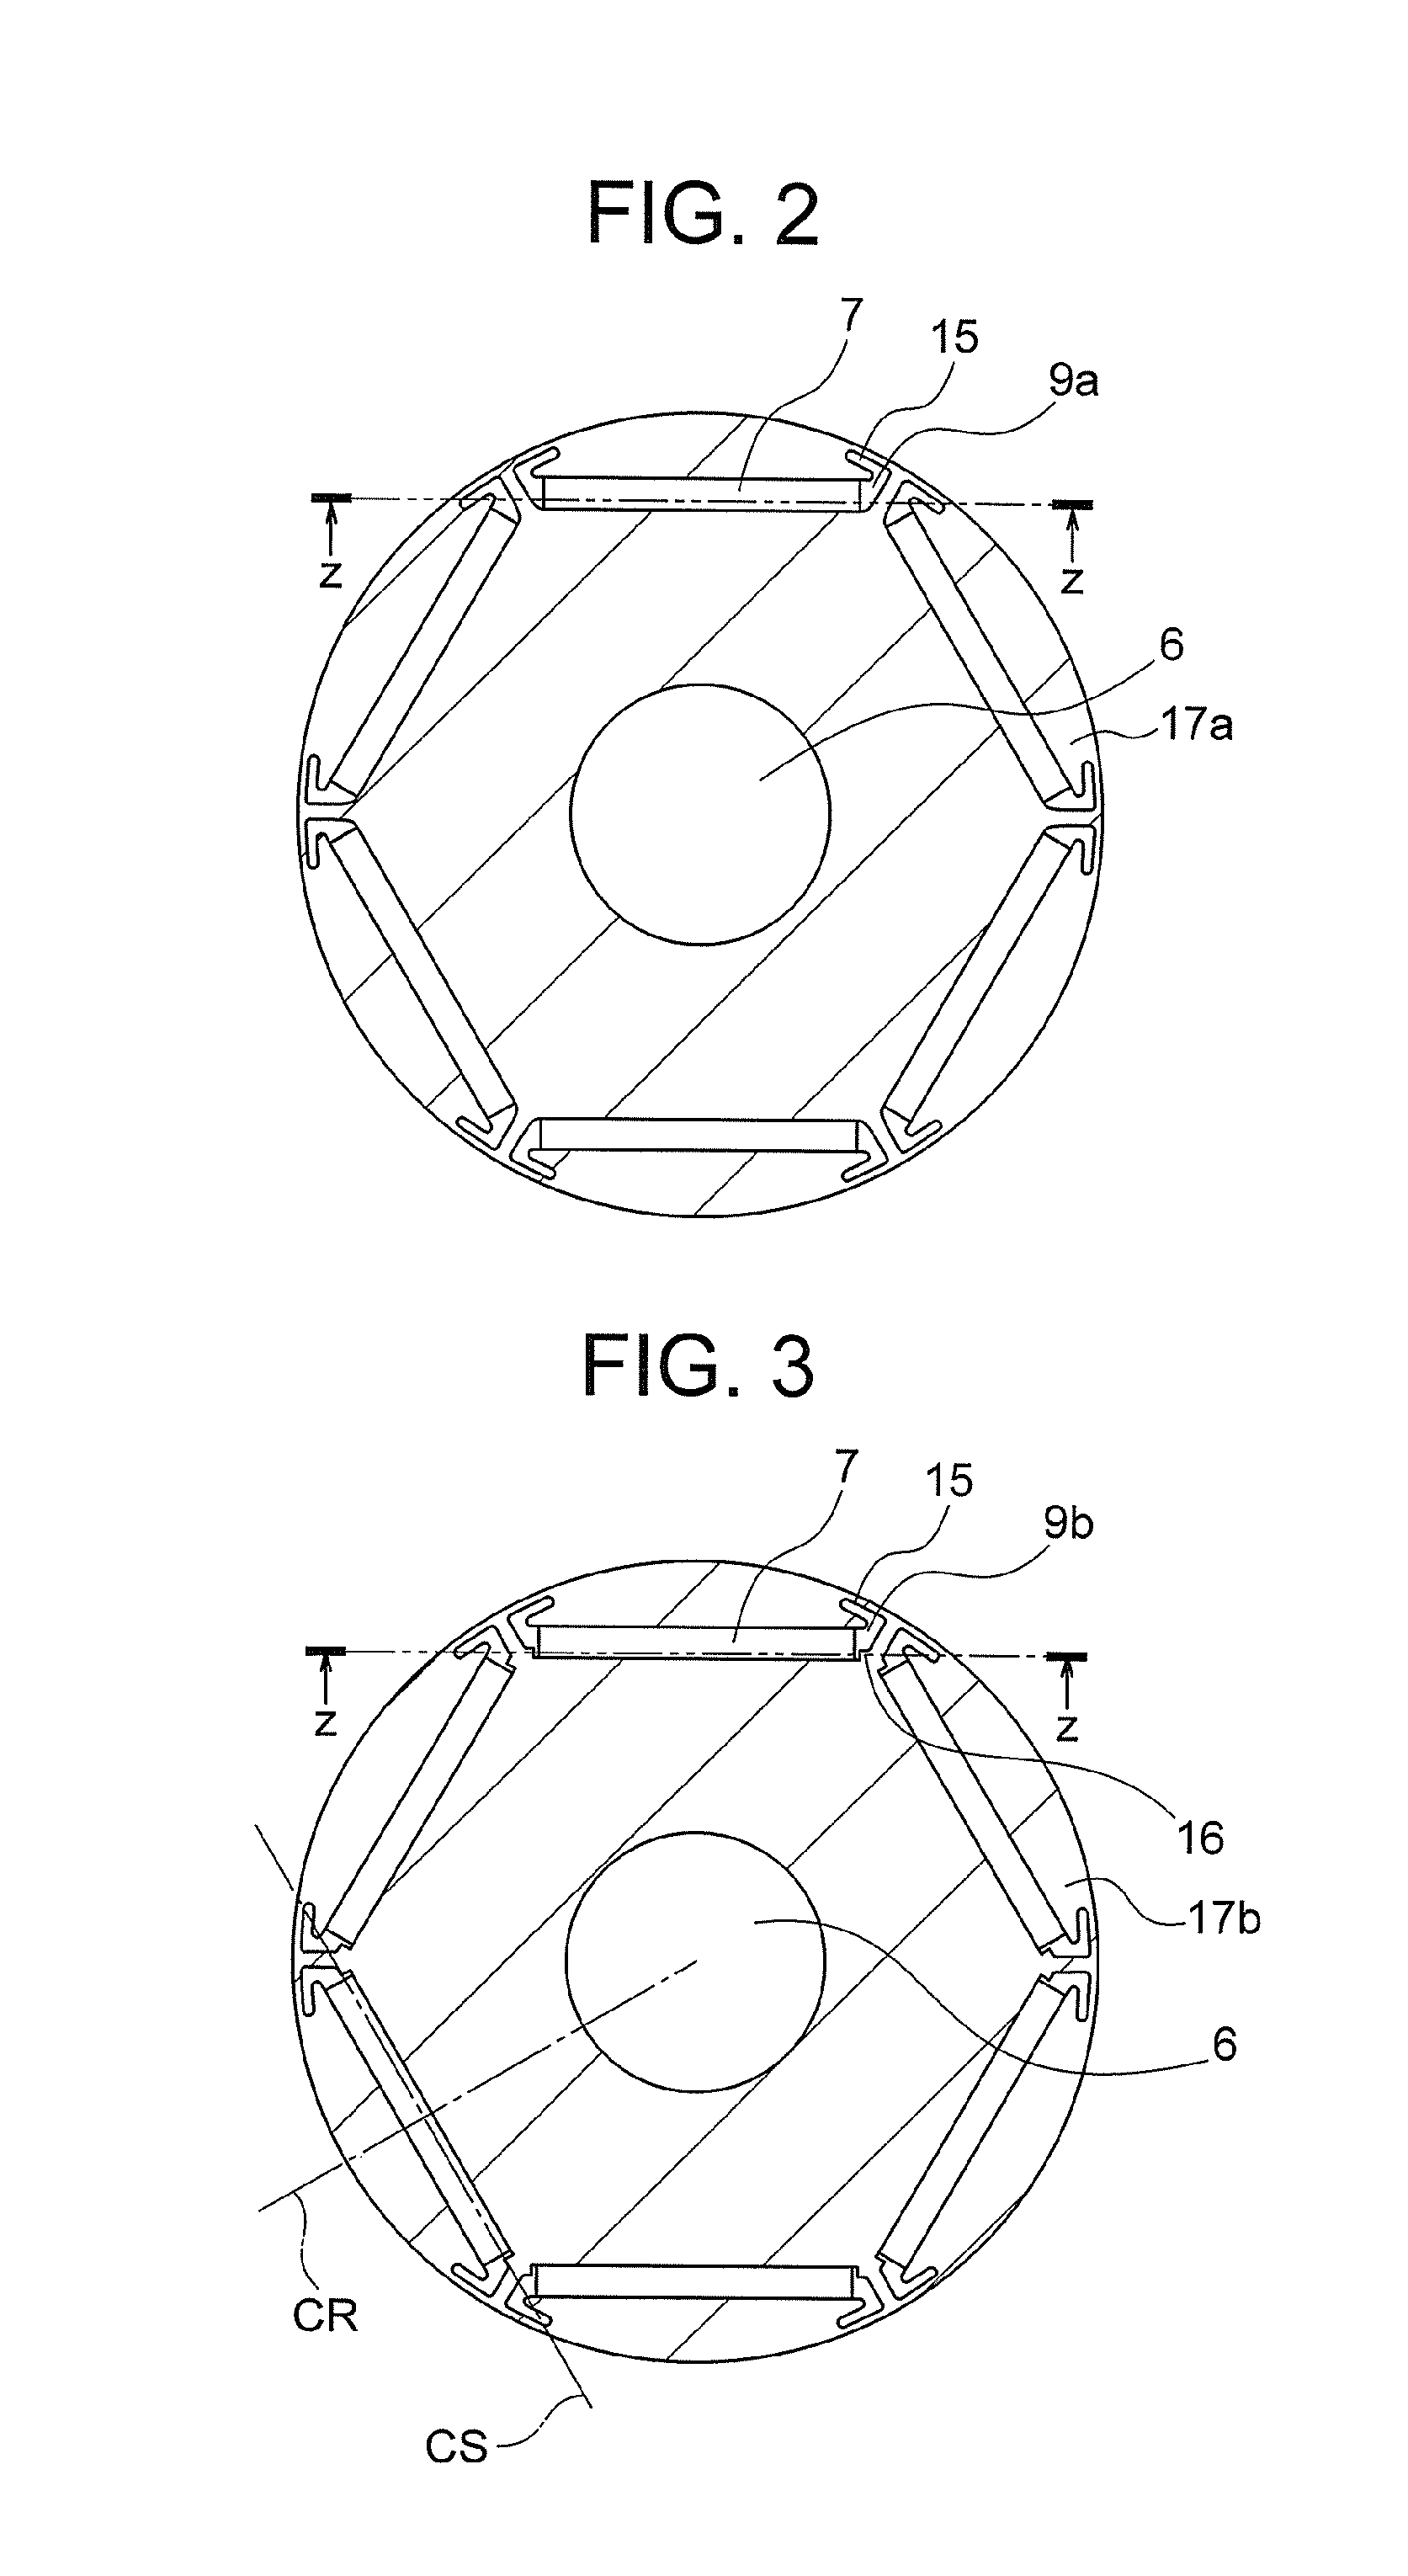 An interior permanent magnet motor